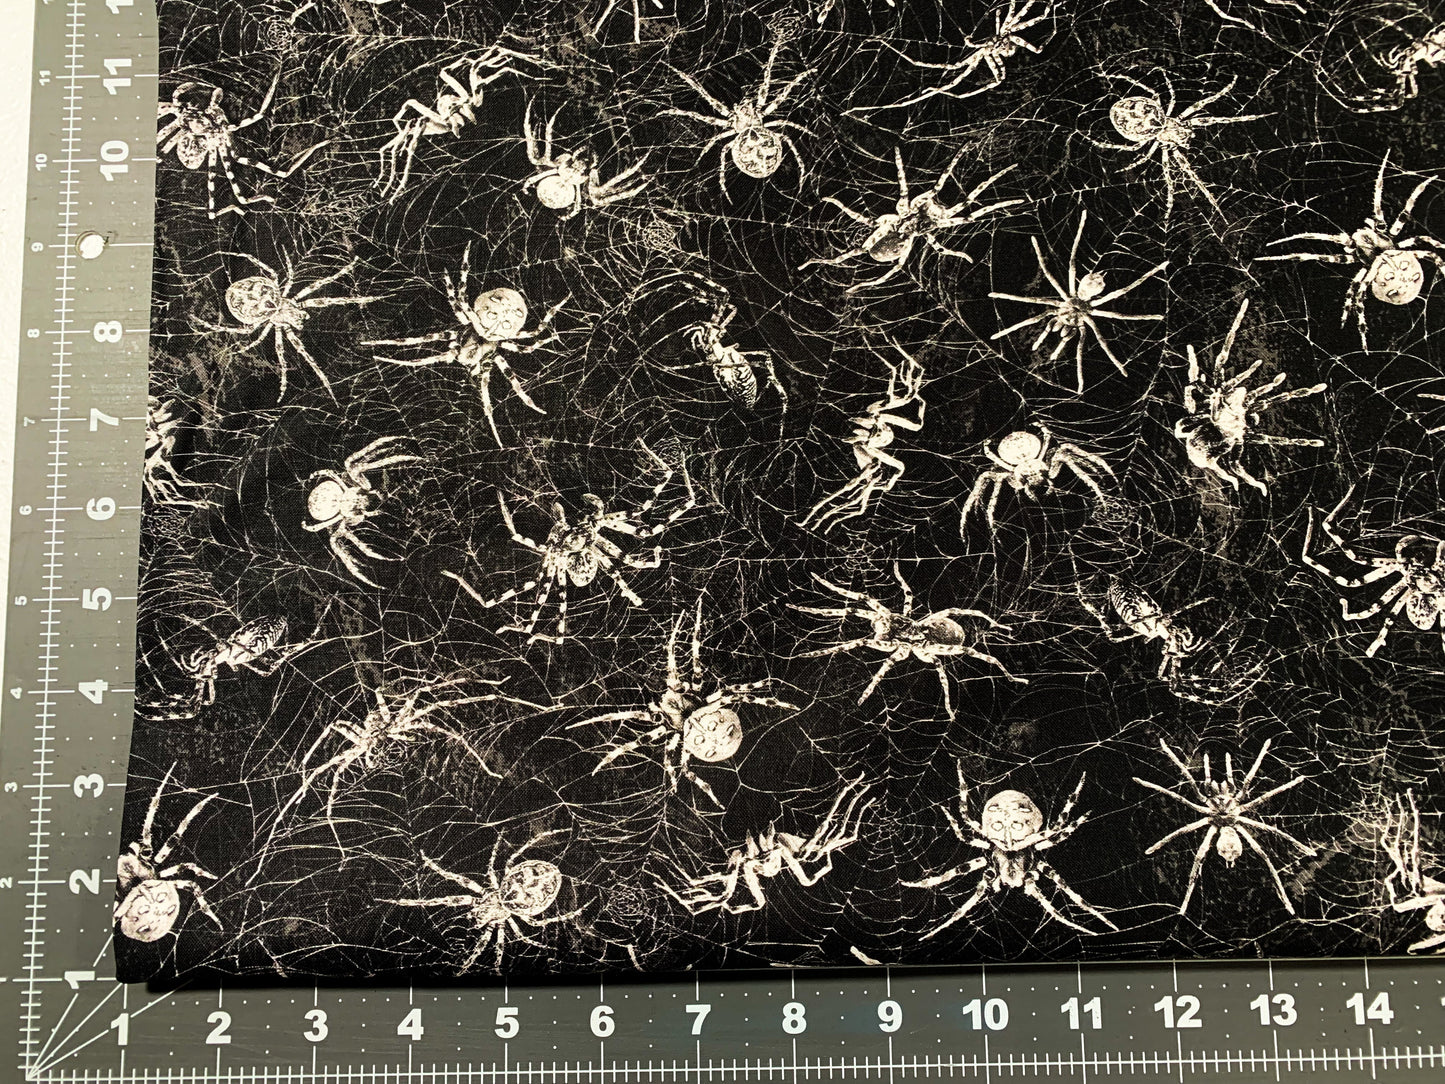 Black Creepy Spiders fabric CD1833 Wicked Spiderwebs